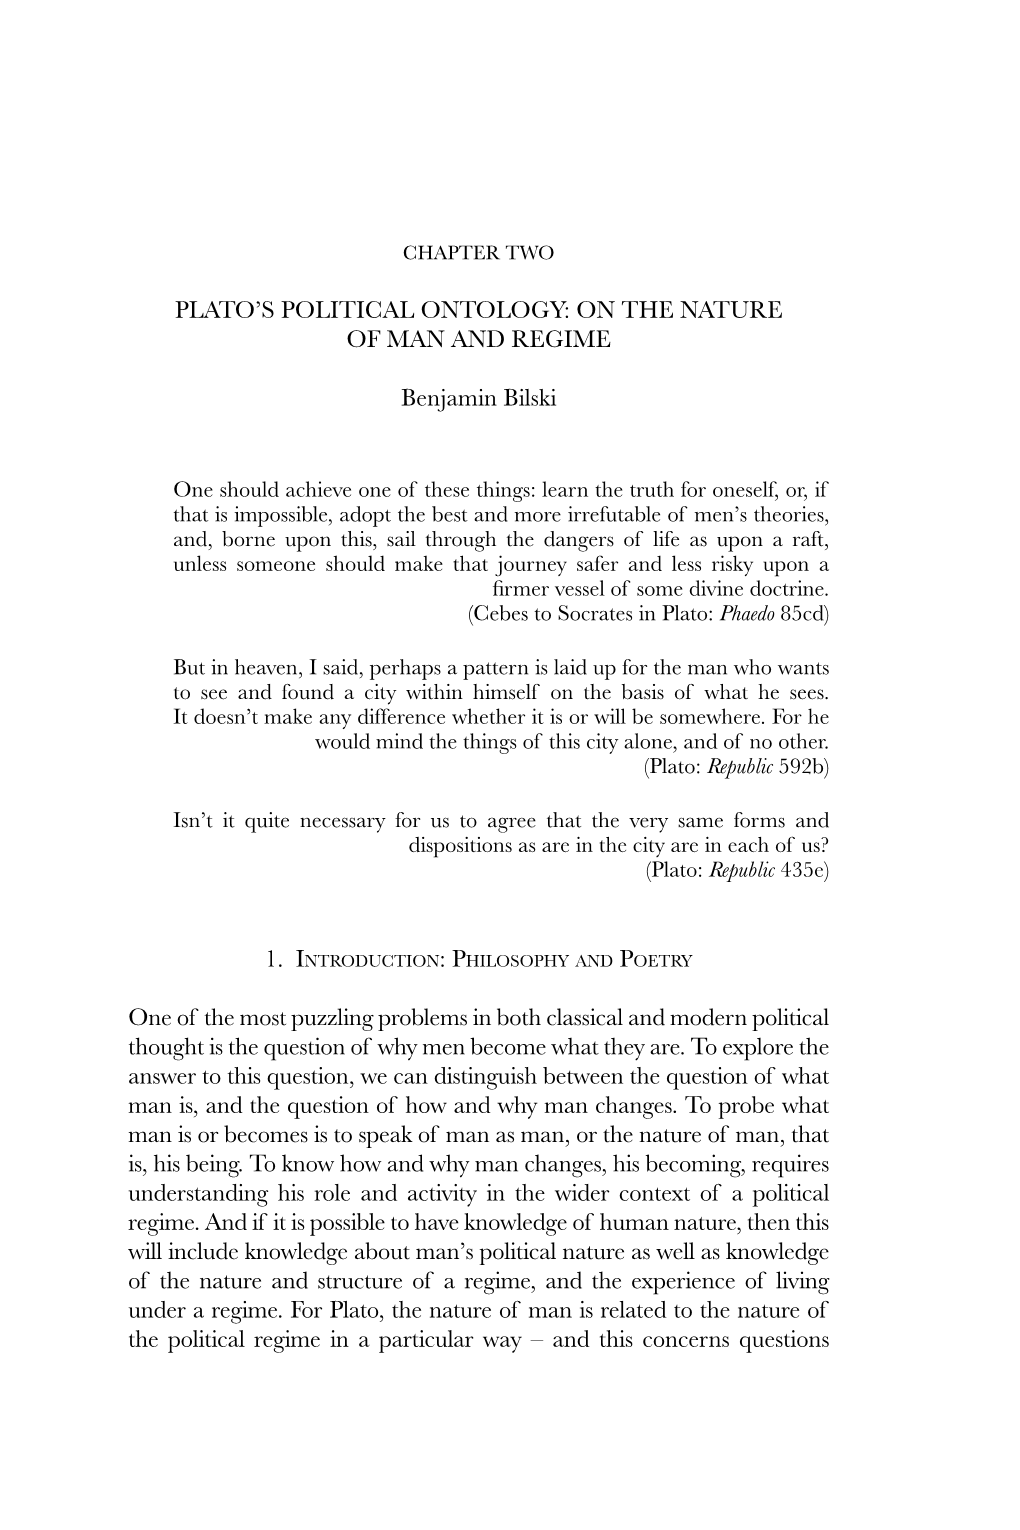 Plato's Political Ontology